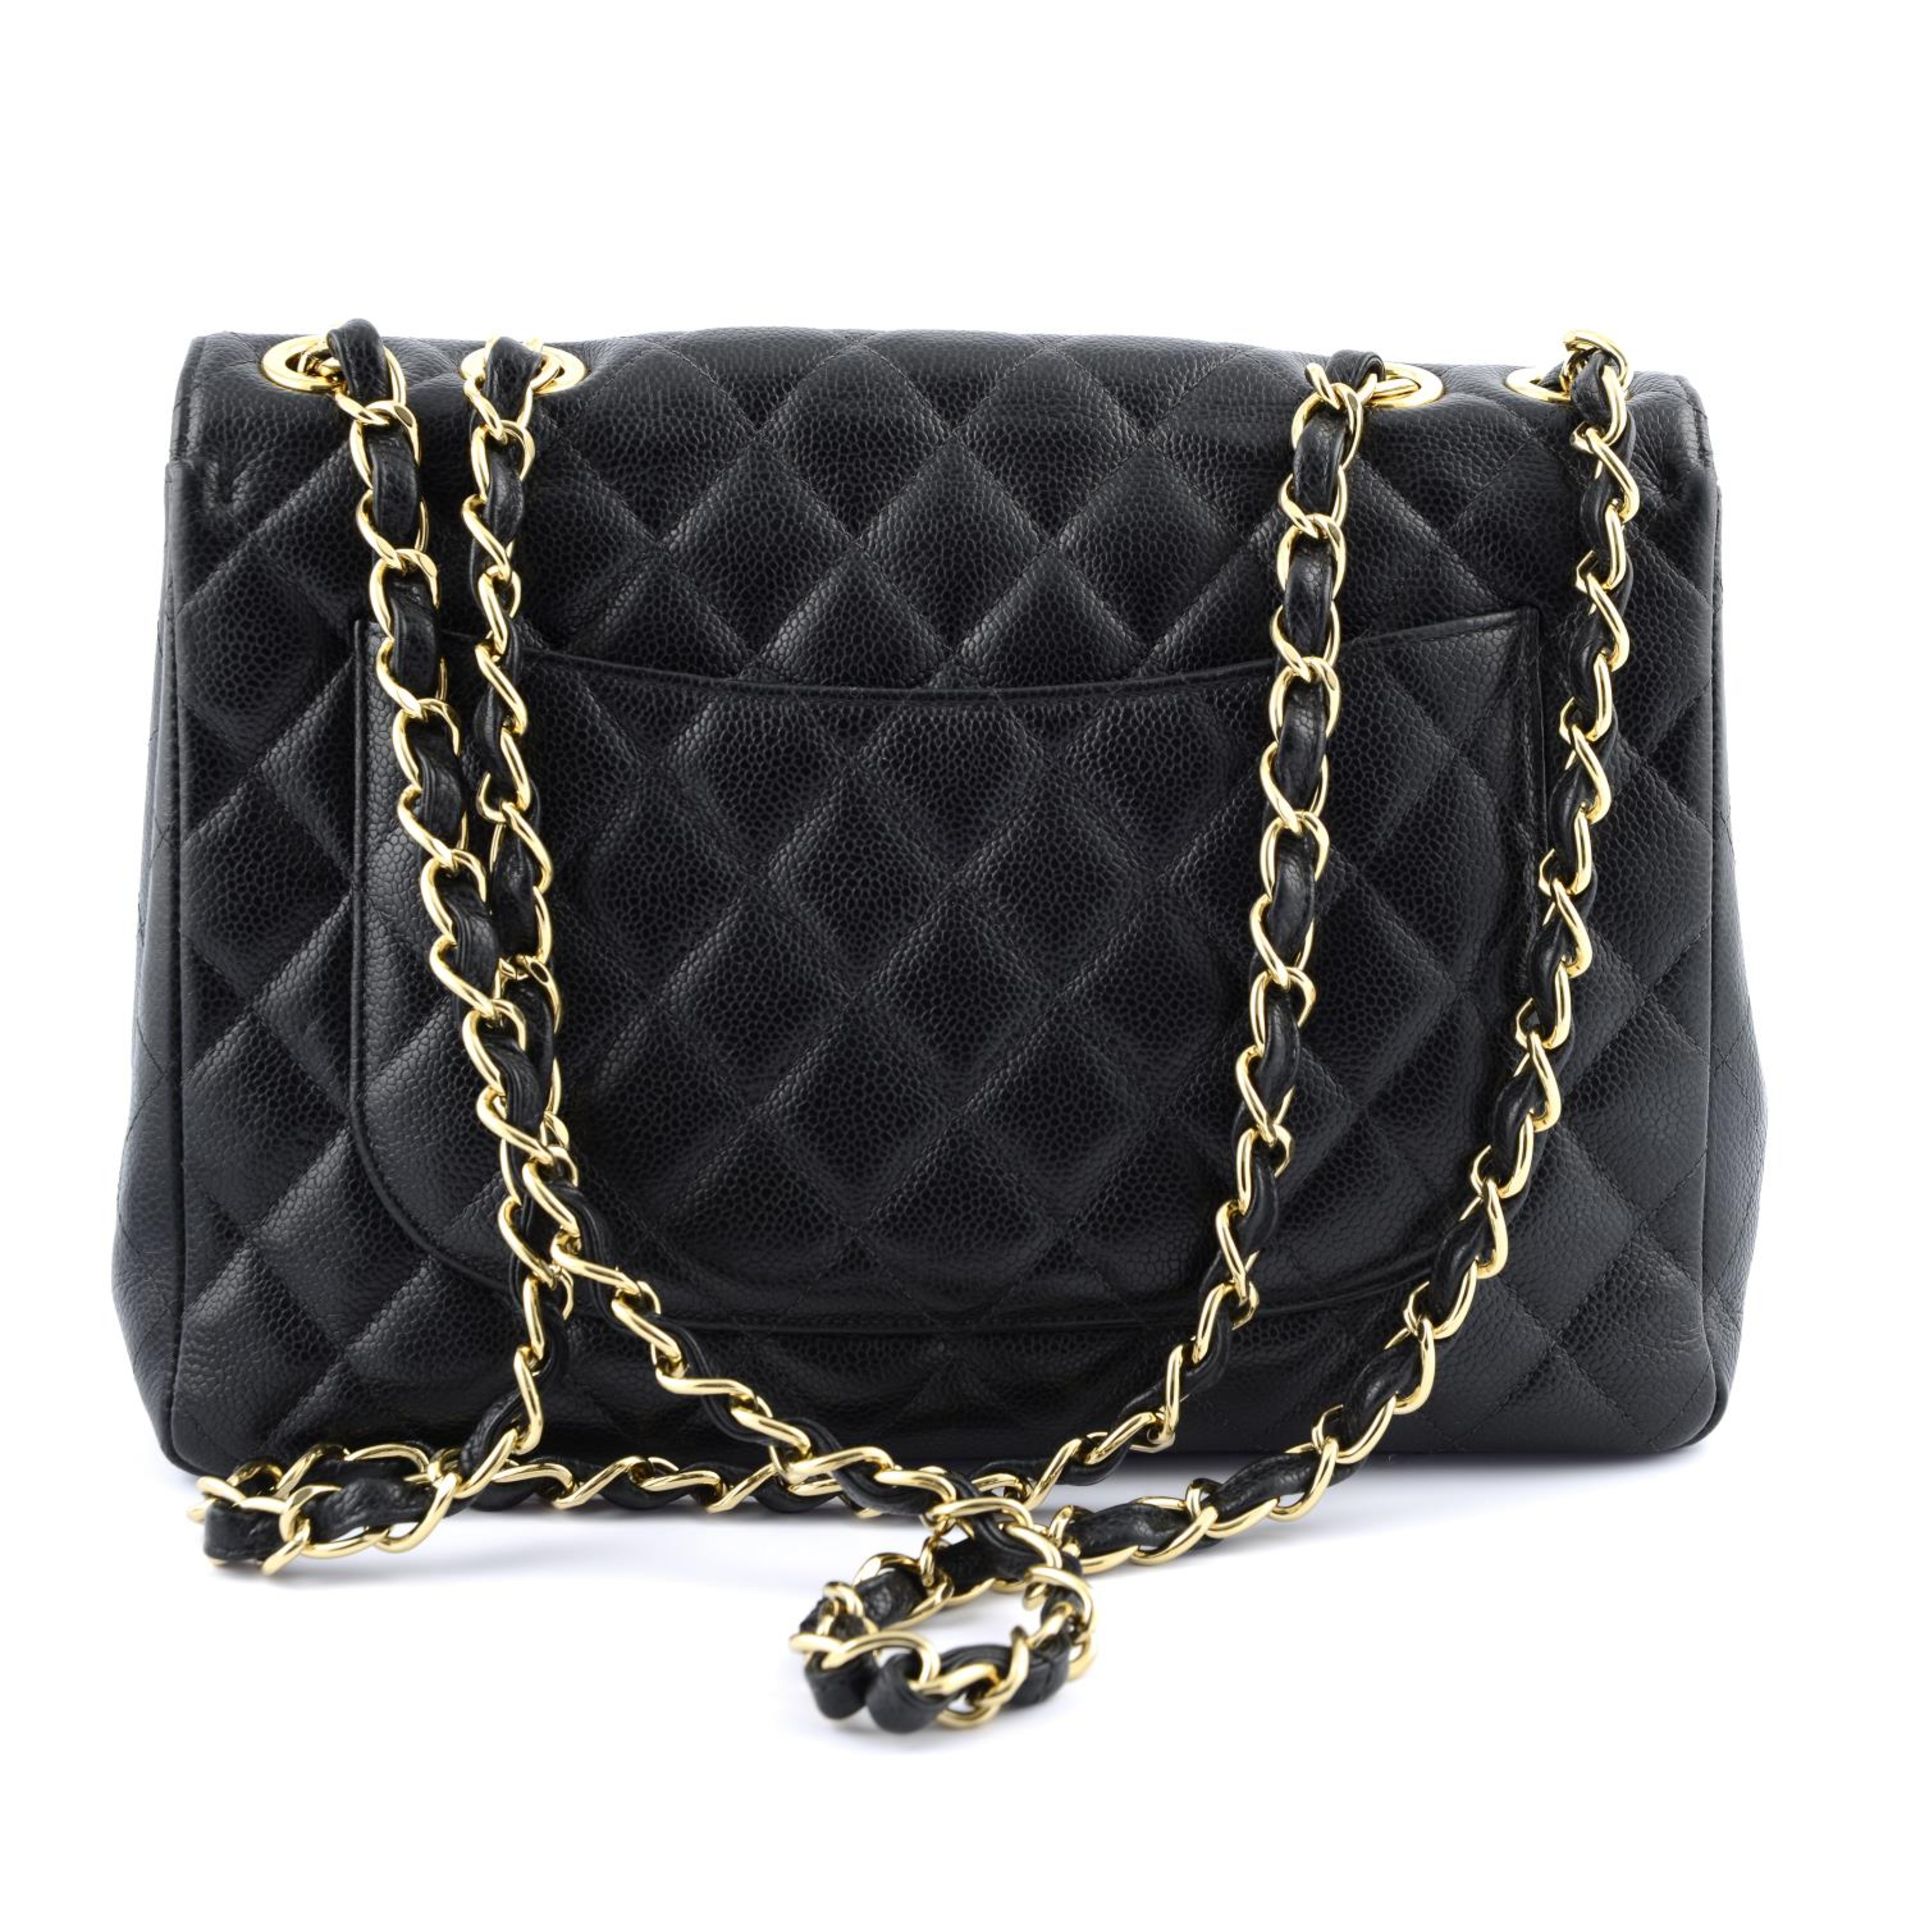 CHANEL - a Jumbo Caviar Classic Flap handbag. - Image 2 of 4